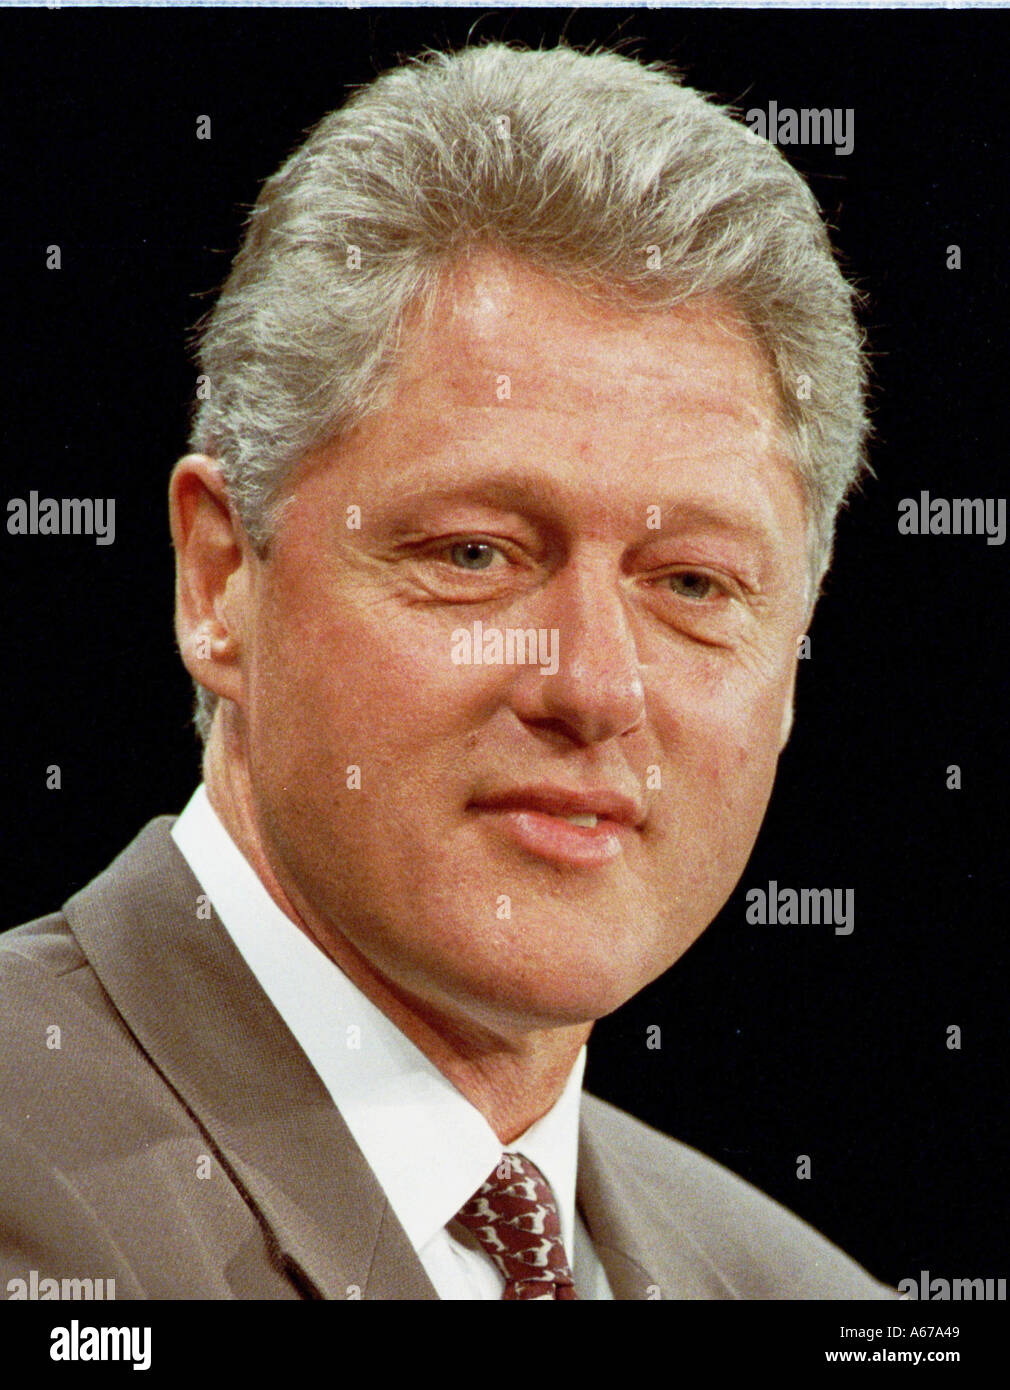 Former American President Bill Clinton Stock Photo